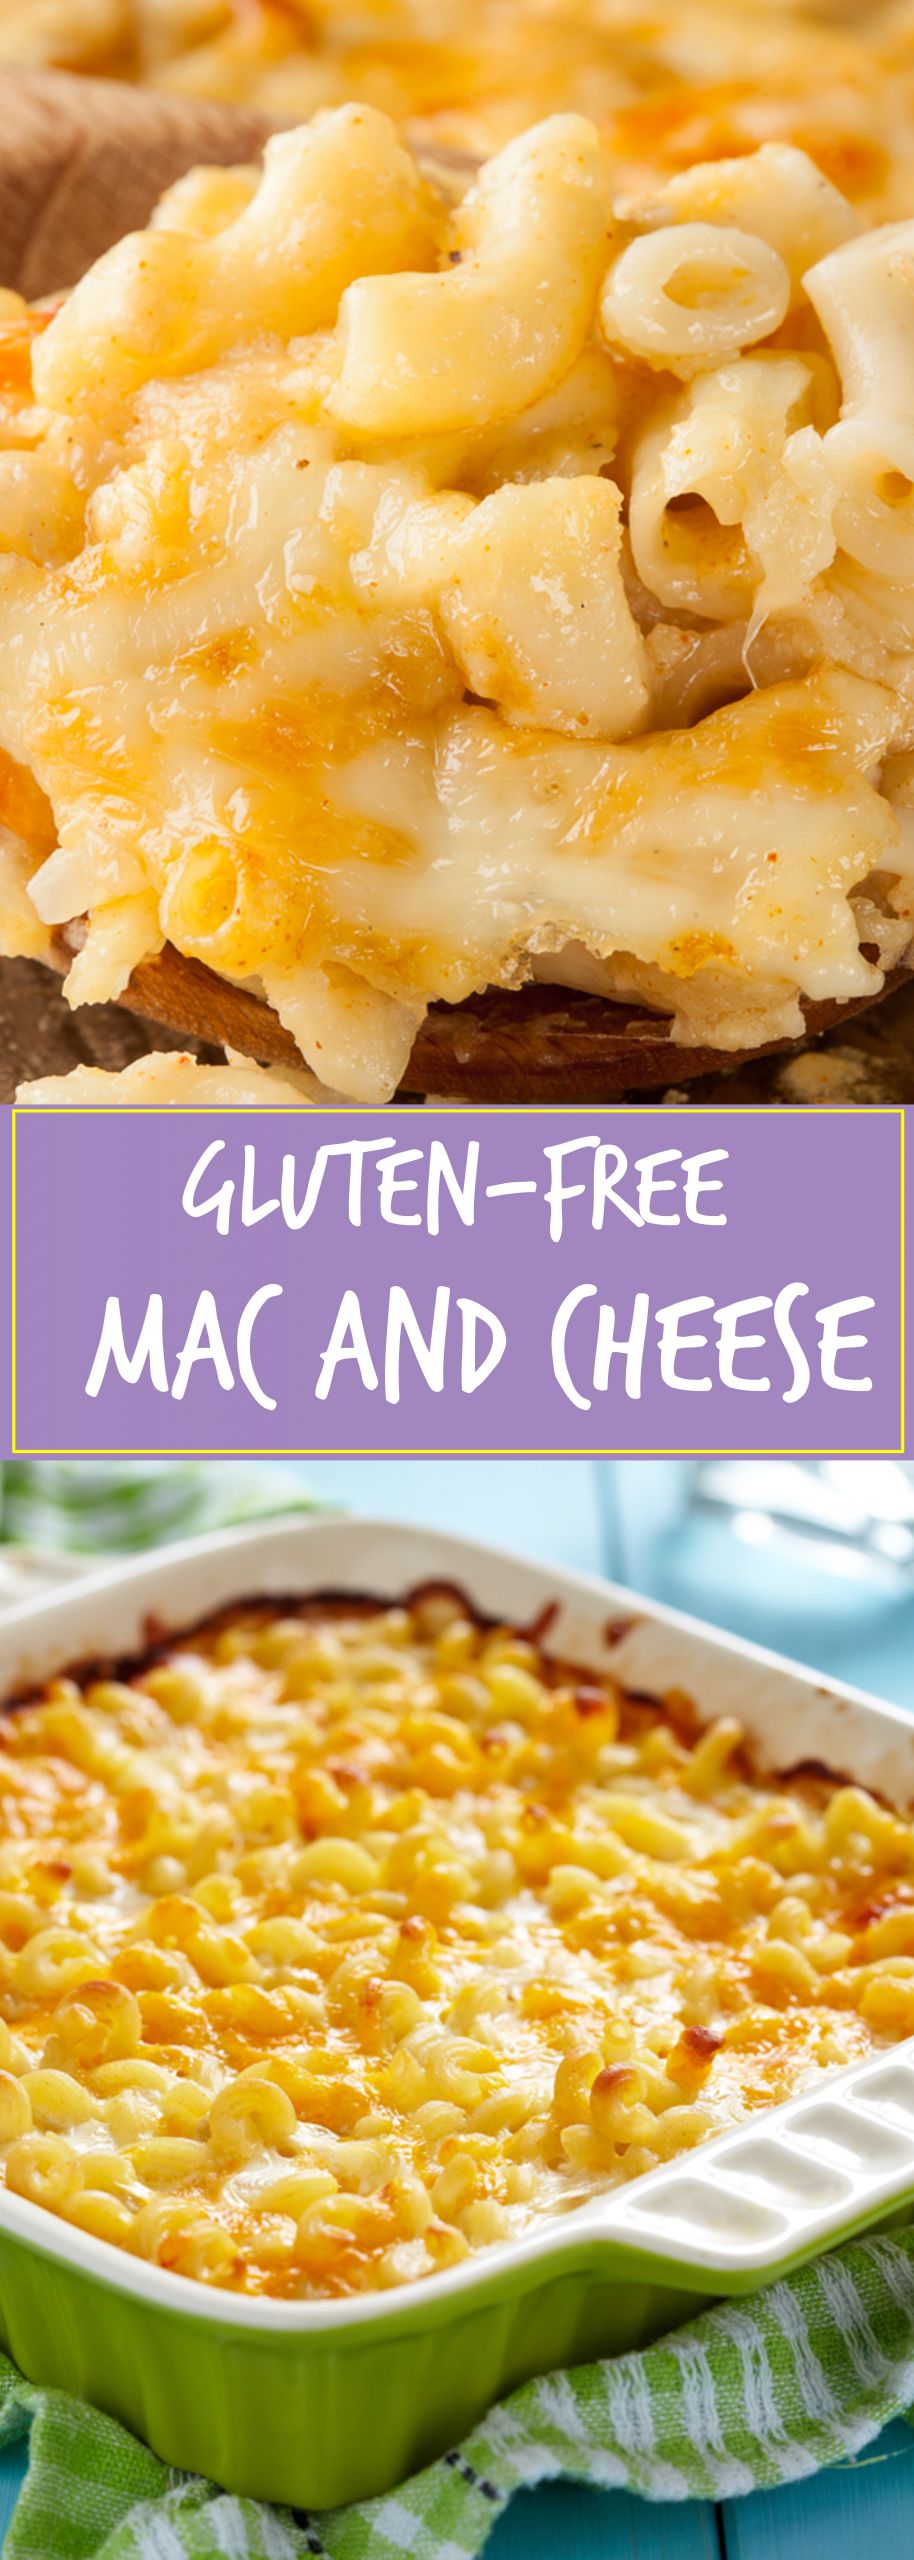 Gluten Free Mac And Cheese Recipes
 Homemade Gluten Free Mac and Cheese Paleo Recipes